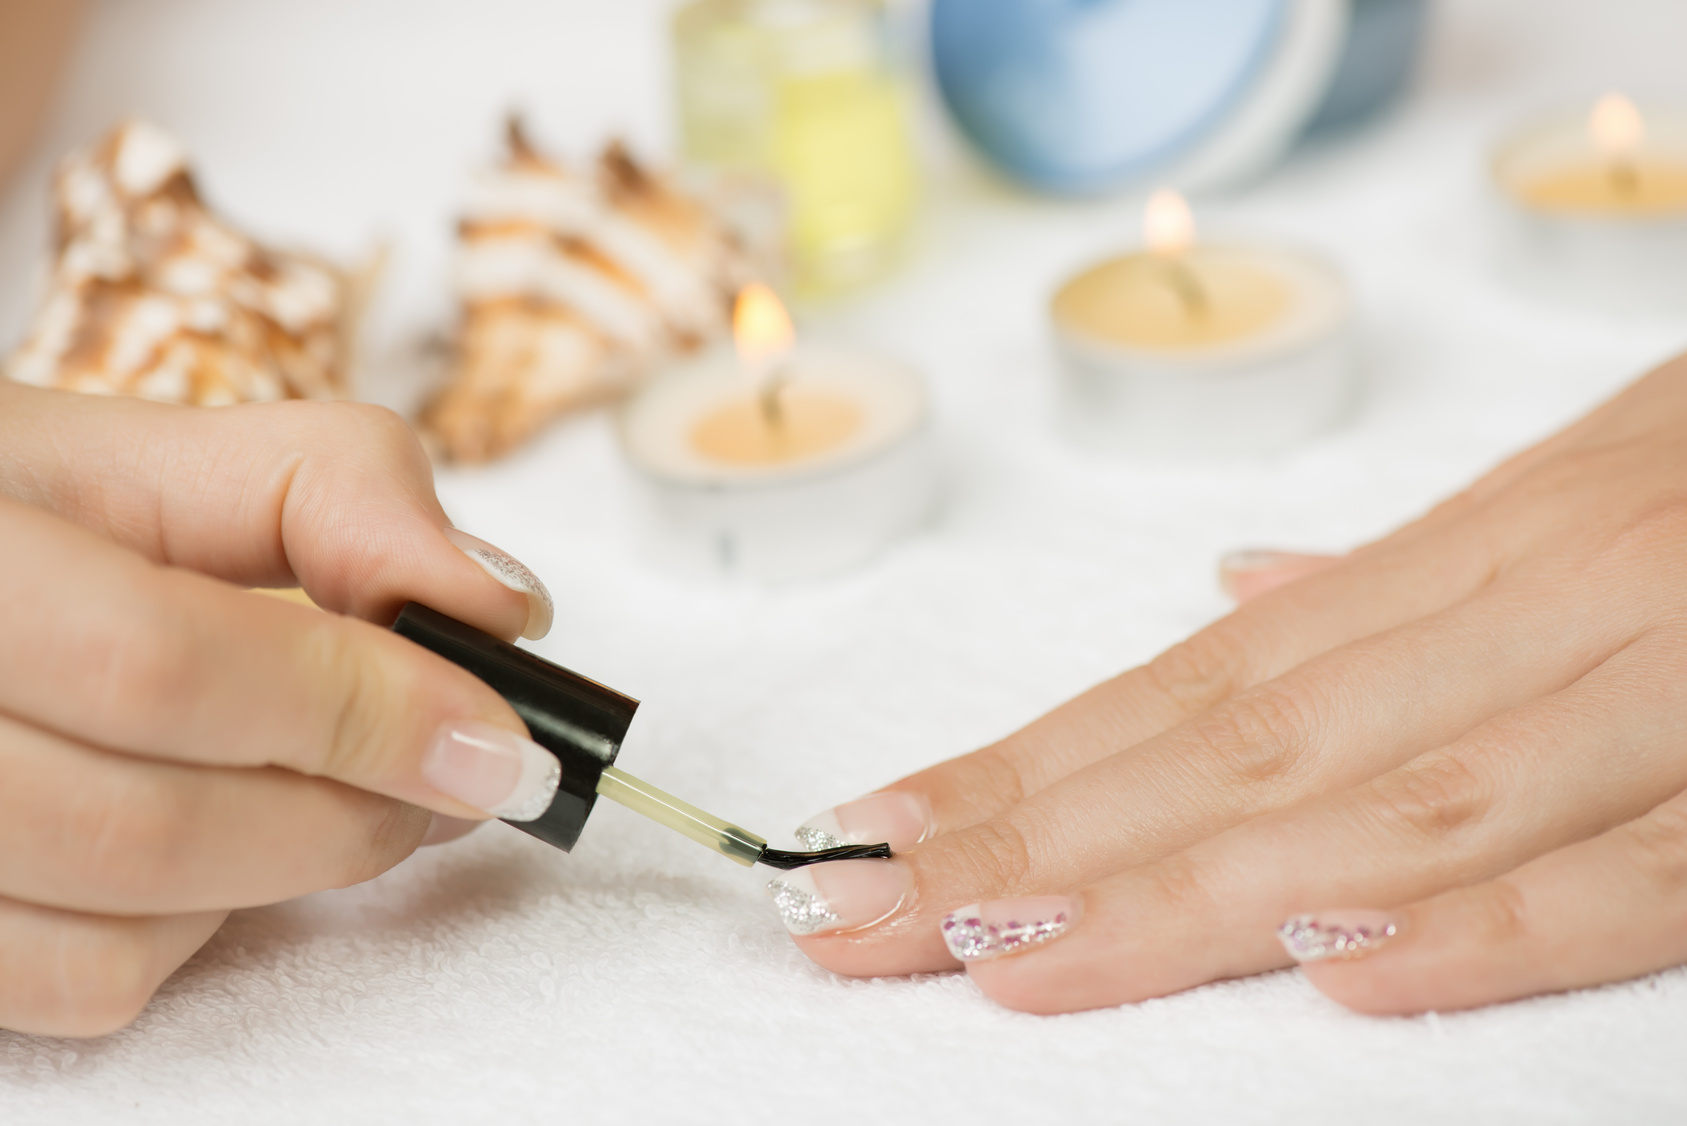 Manicure treatment – applying cuticle oil